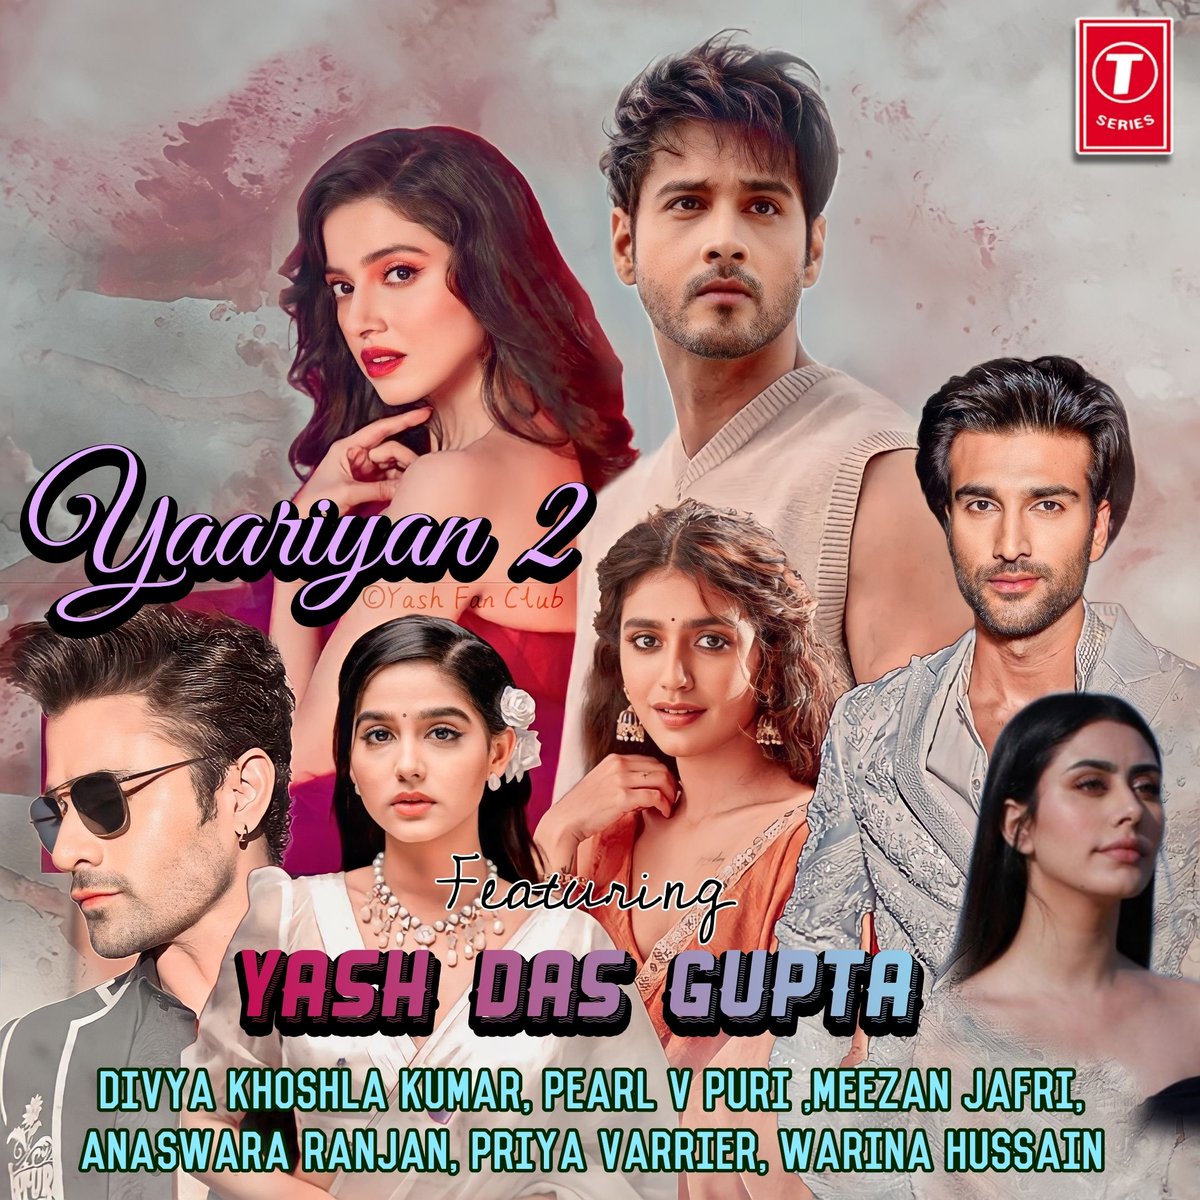 Yash Dasgupta's first Bollywood debut  #yaariyan2 is now set to release this festive season on 20th October 2023.

#yashdasgupta #BhushanKumar @Yash_Dasgupta  @SapruAndRao  #meezaanj #anaswararajan @pearlvpuri   #pearlvpuri #divyakhoslakumar